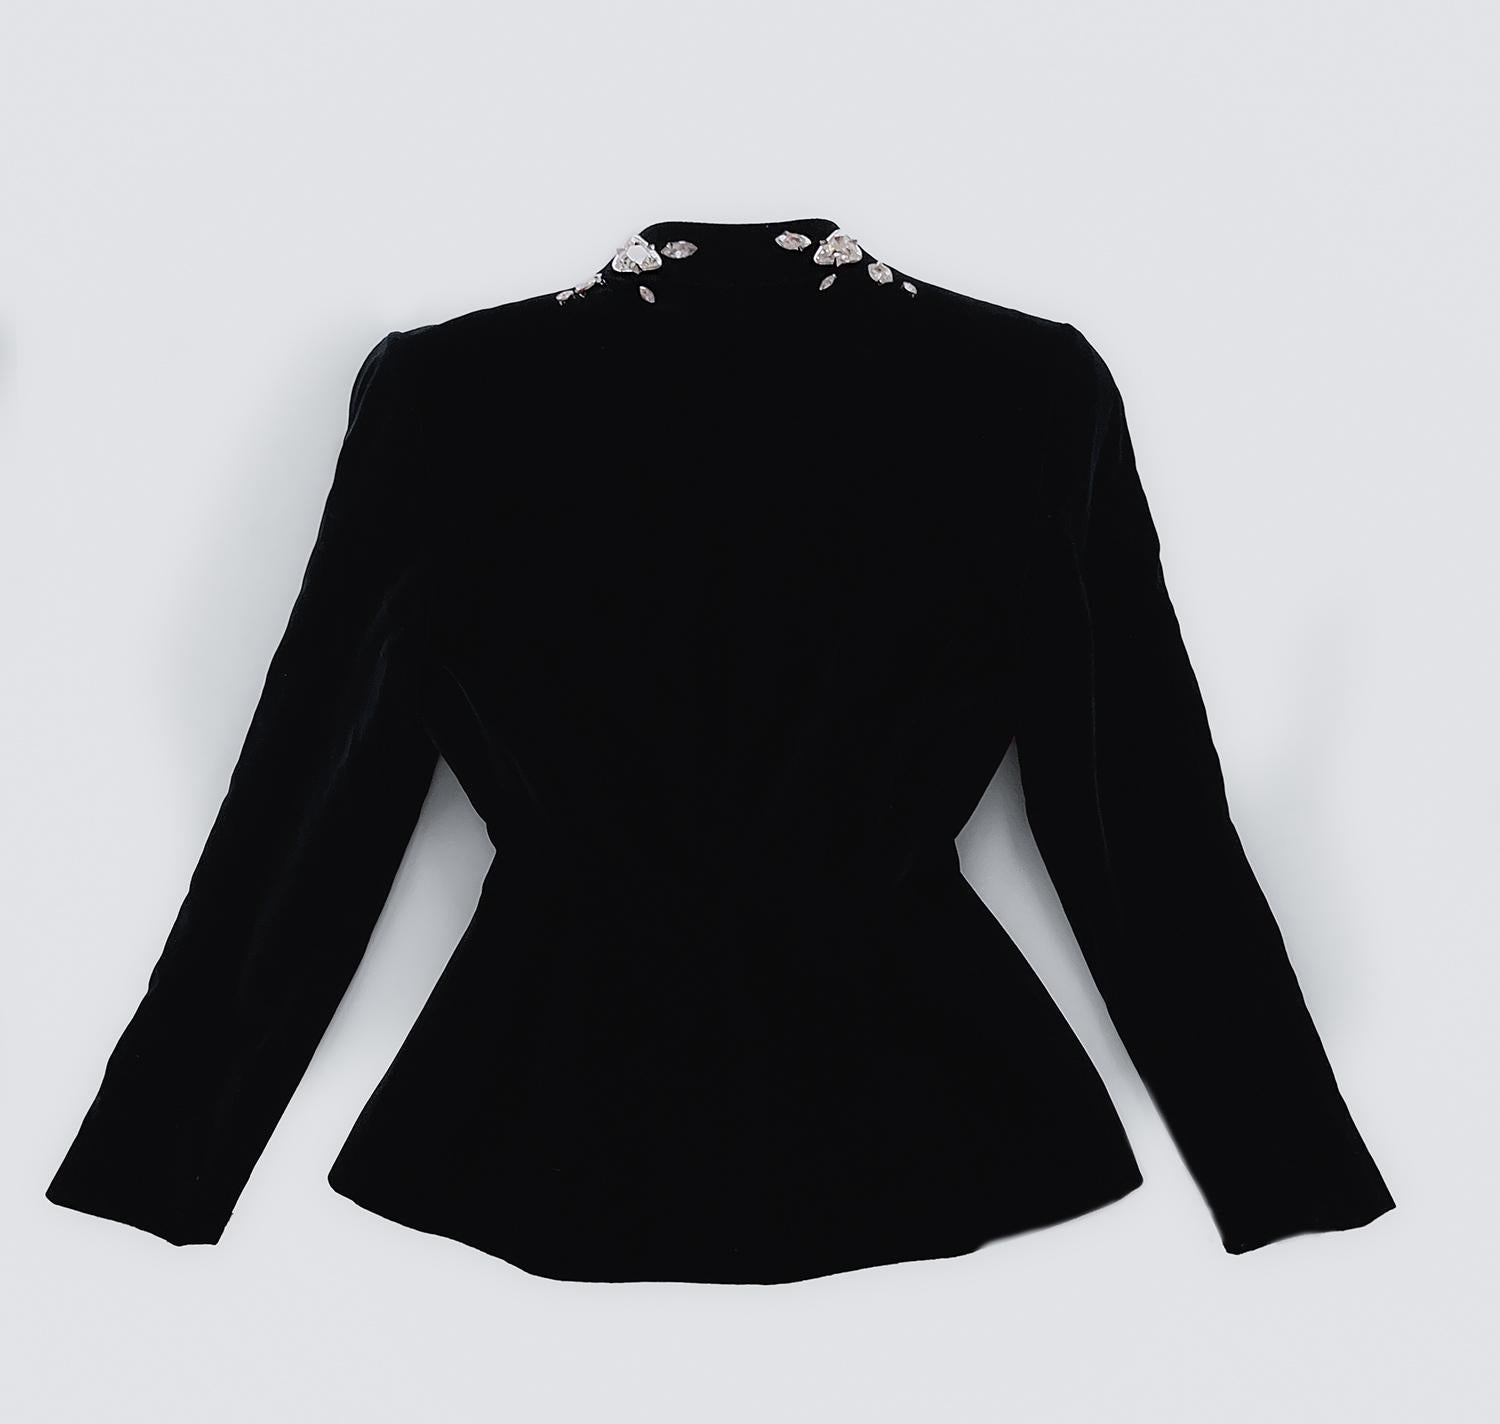 Thierry Mugler GLAM Jacket Crystal Black Velvet Rhinestone FW 1985  For Sale 6